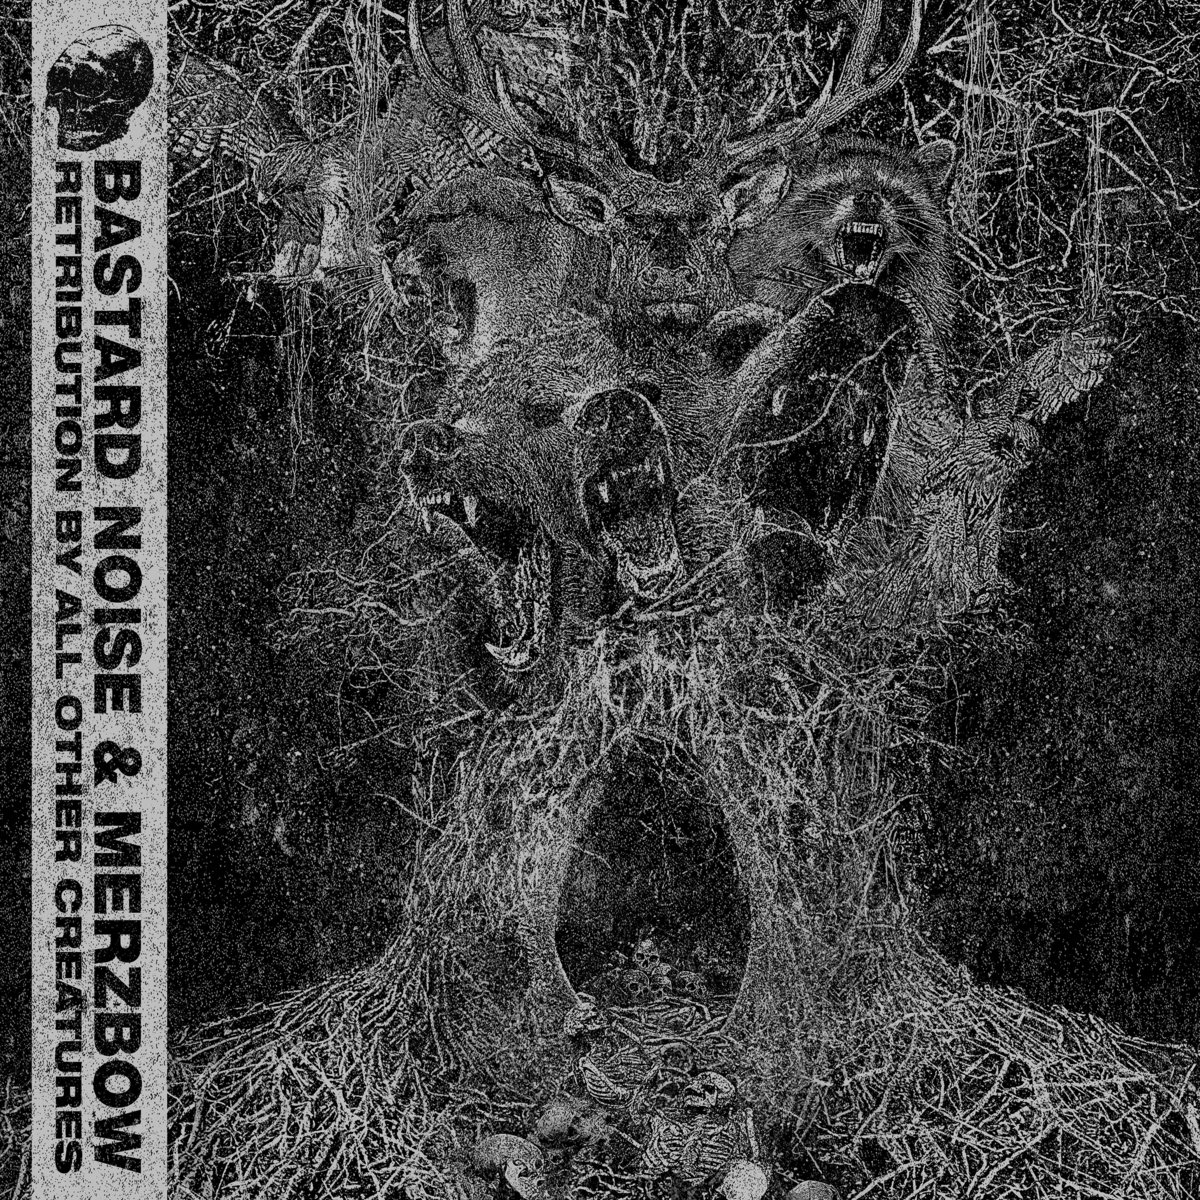 Bastard Noise / Merzbow - Retribution By All Other Creature 2xLP